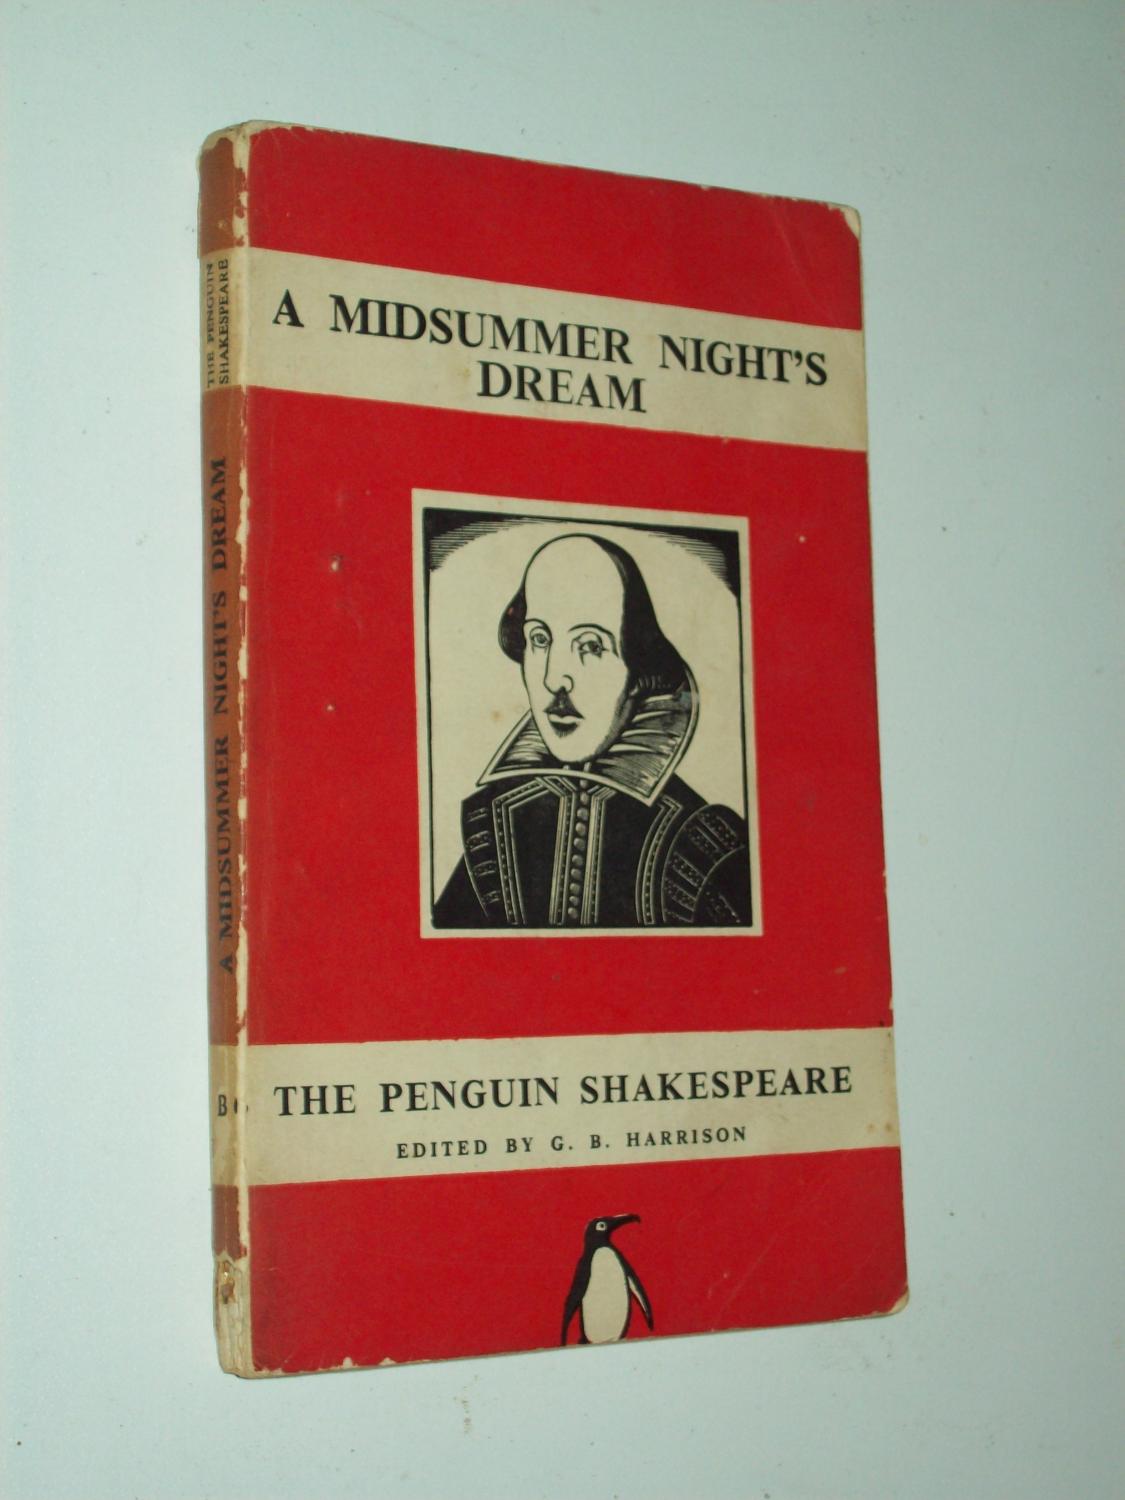 A Midsummer Night's Dream [The Penguin Shakespeare B6] - William Shakespeare: Ed. G. B. Harrison